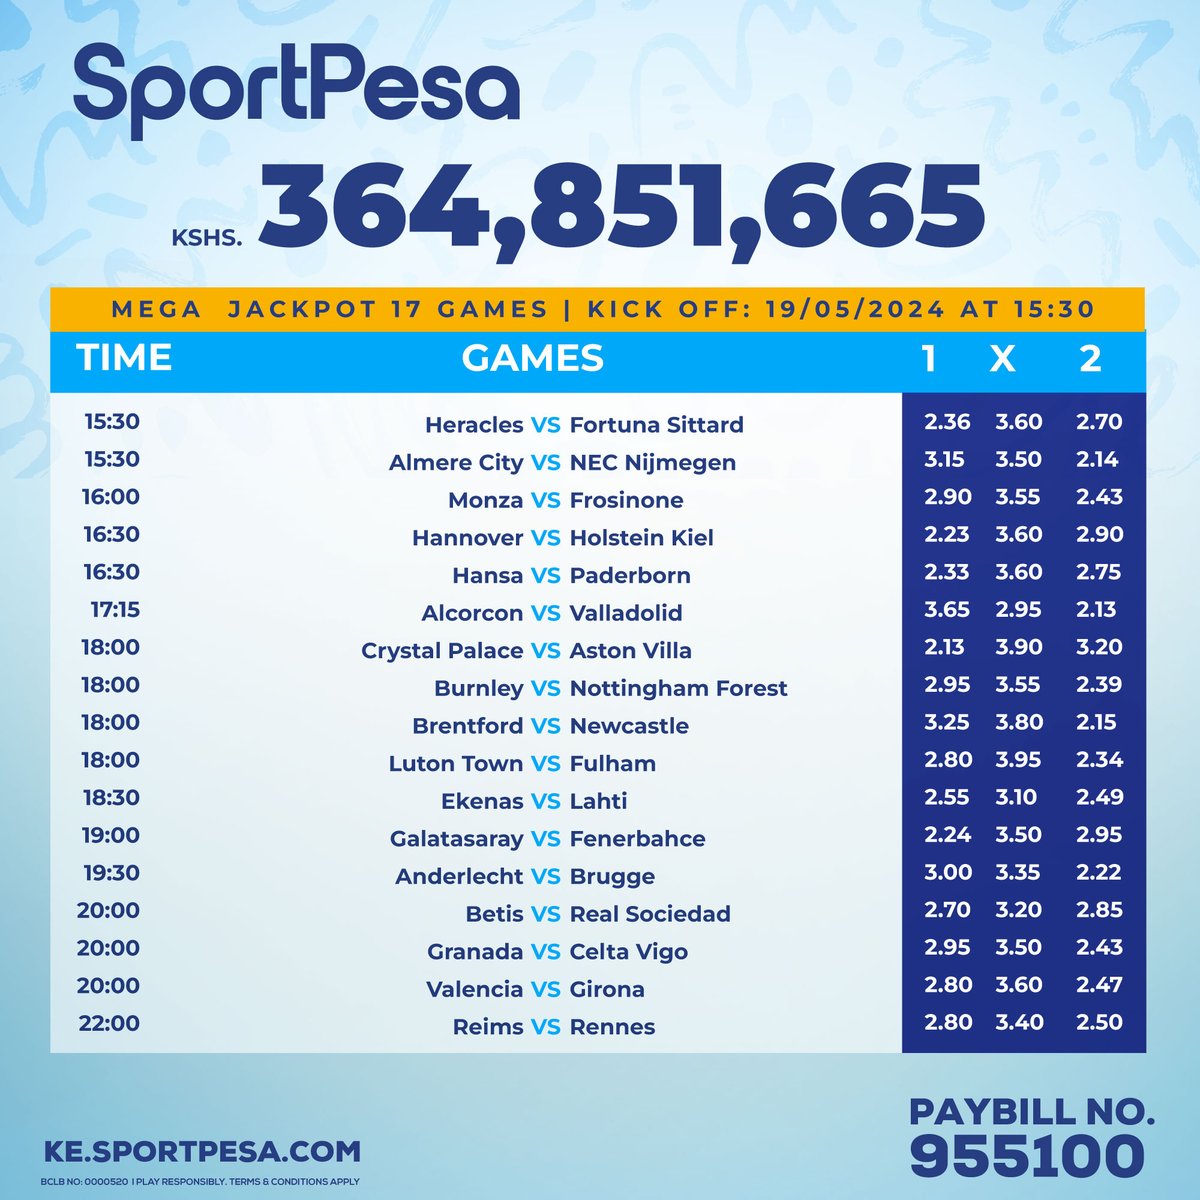 Play on SportPesa Mega Jackpot today with 99 Bob and you could win 364 Million! #ShindaMoreNaSportPesa chambua games zako and remember kuna bonuses Kali Kali from 12 correct Predictions